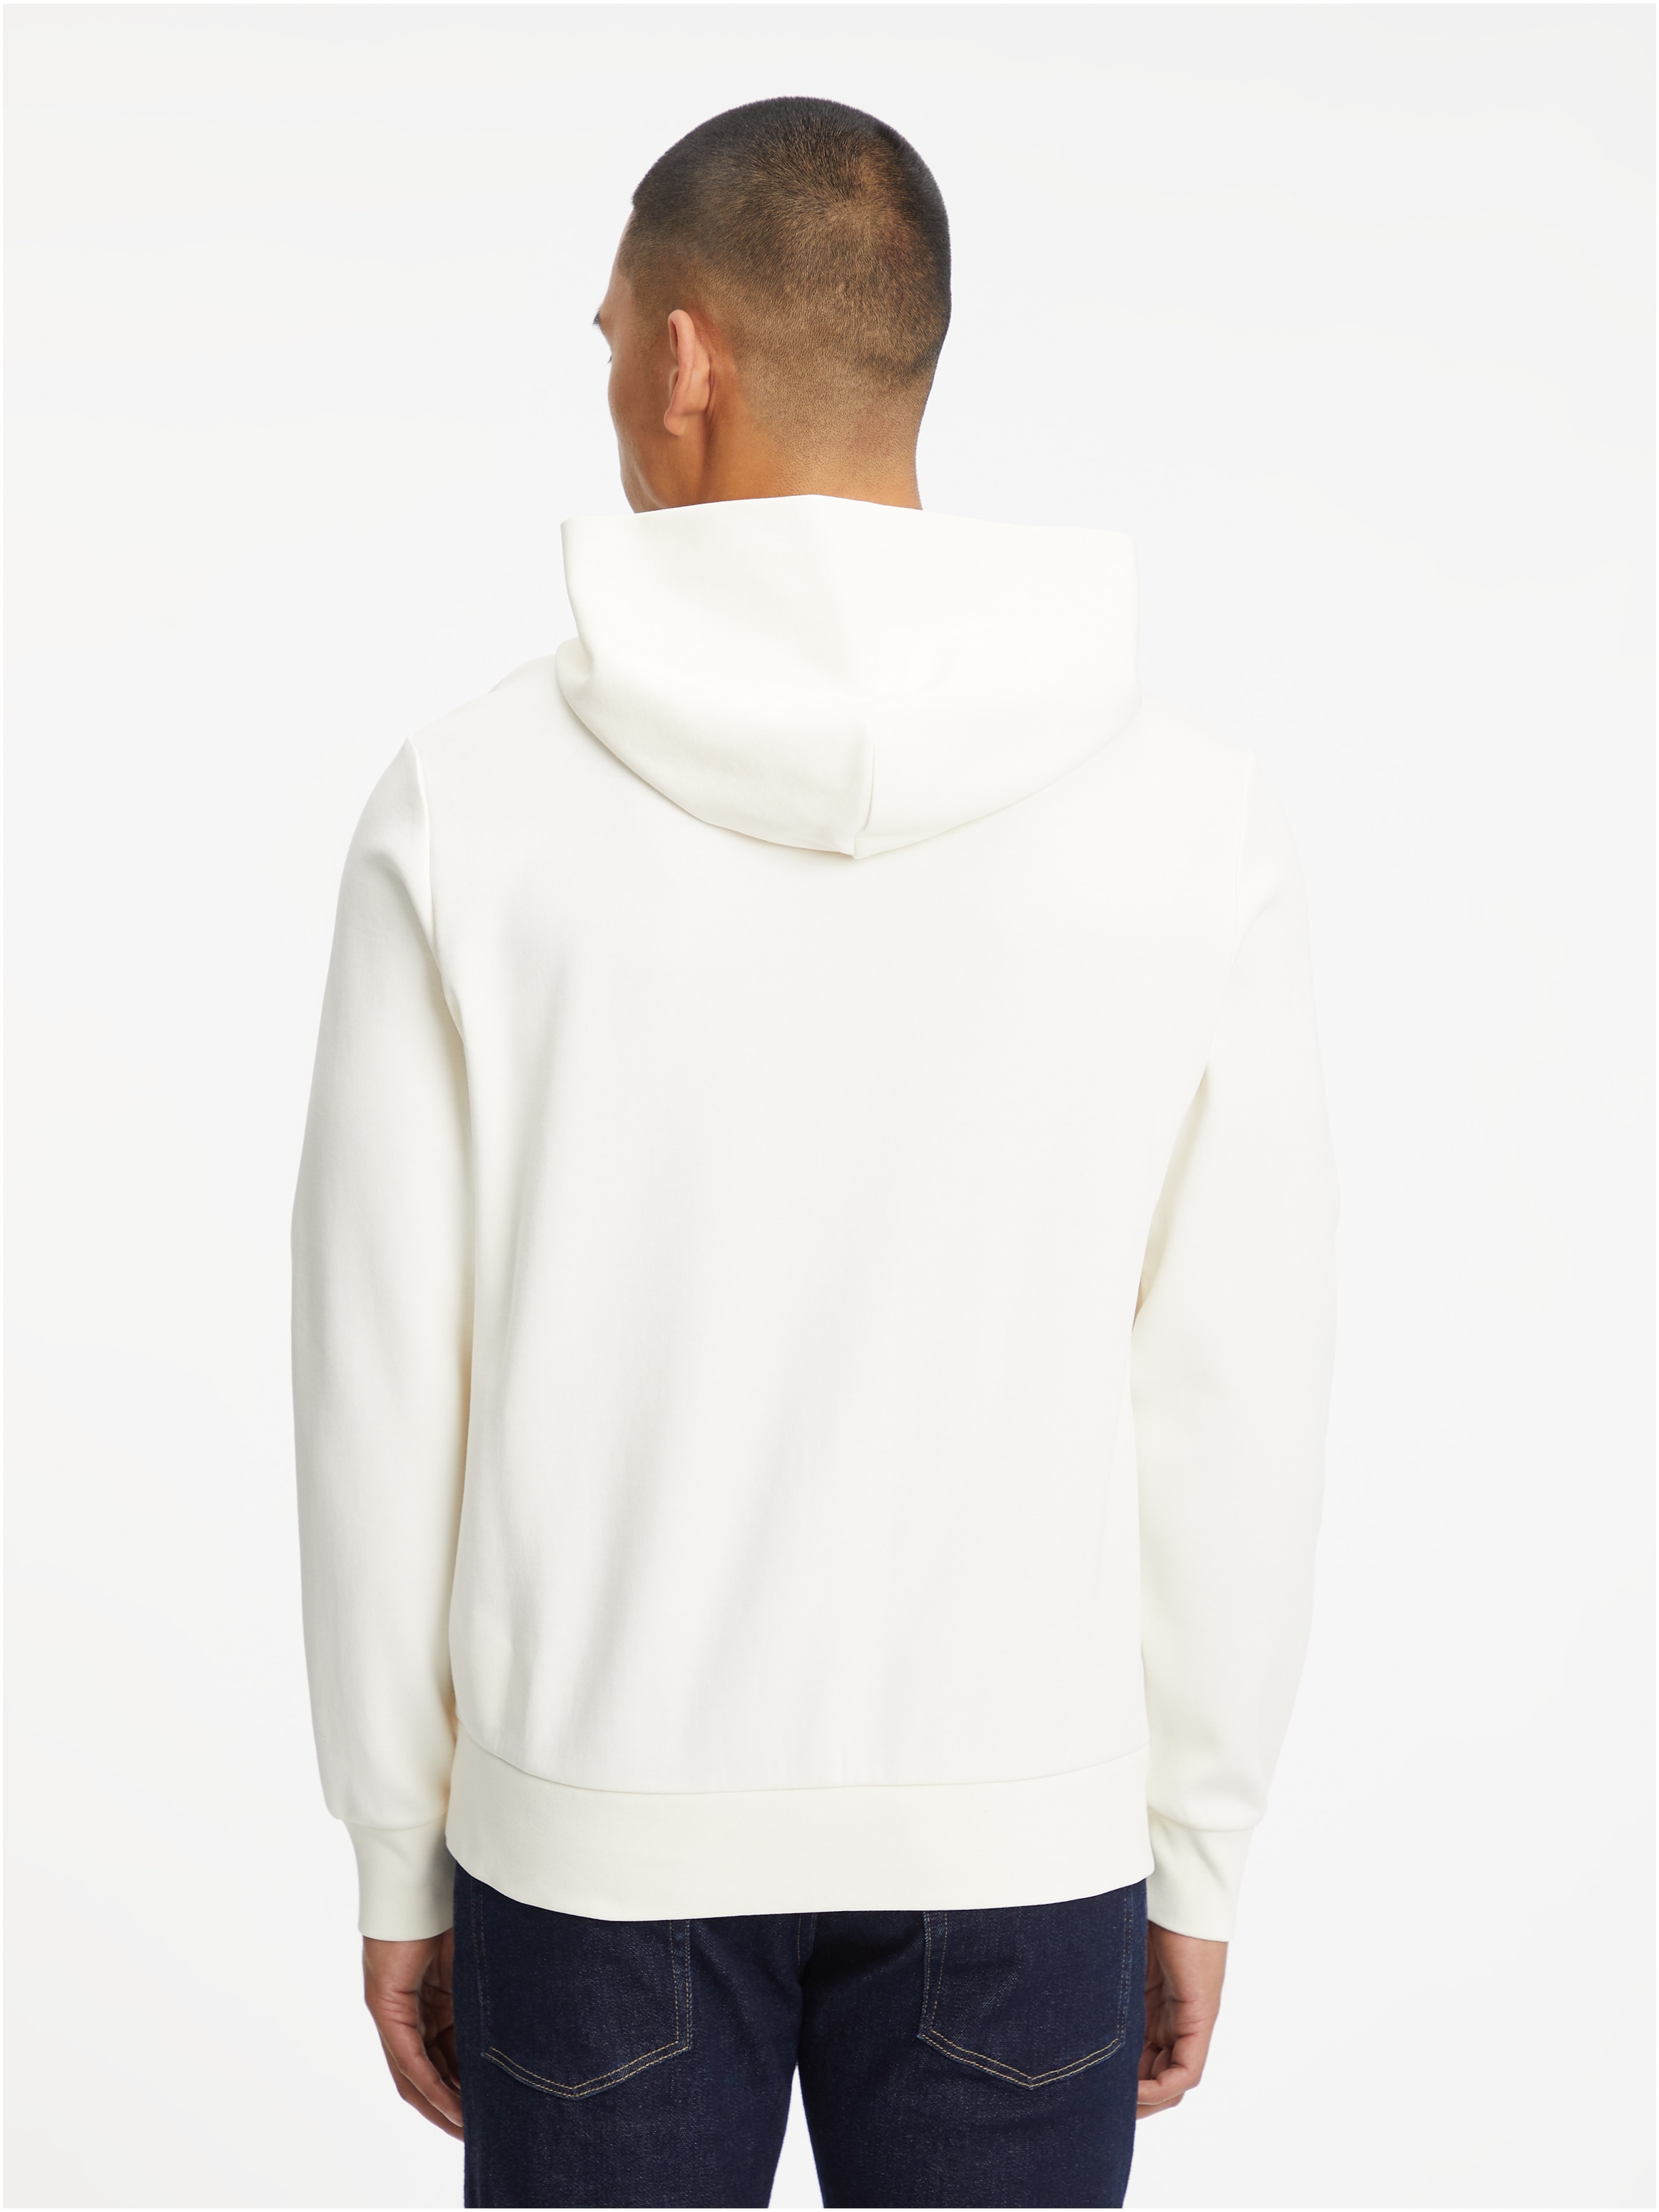 Calvin Klein Kapuzensweatshirt »Sweatshirt MICRO LOGO RE«, mit Logoschriftzug